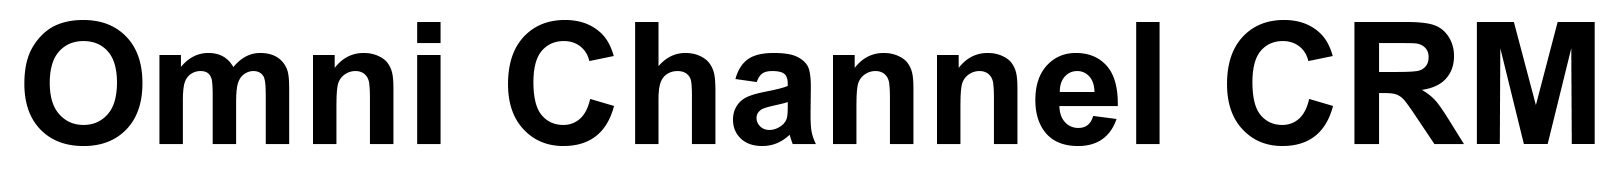 Asalta CRM System Logo